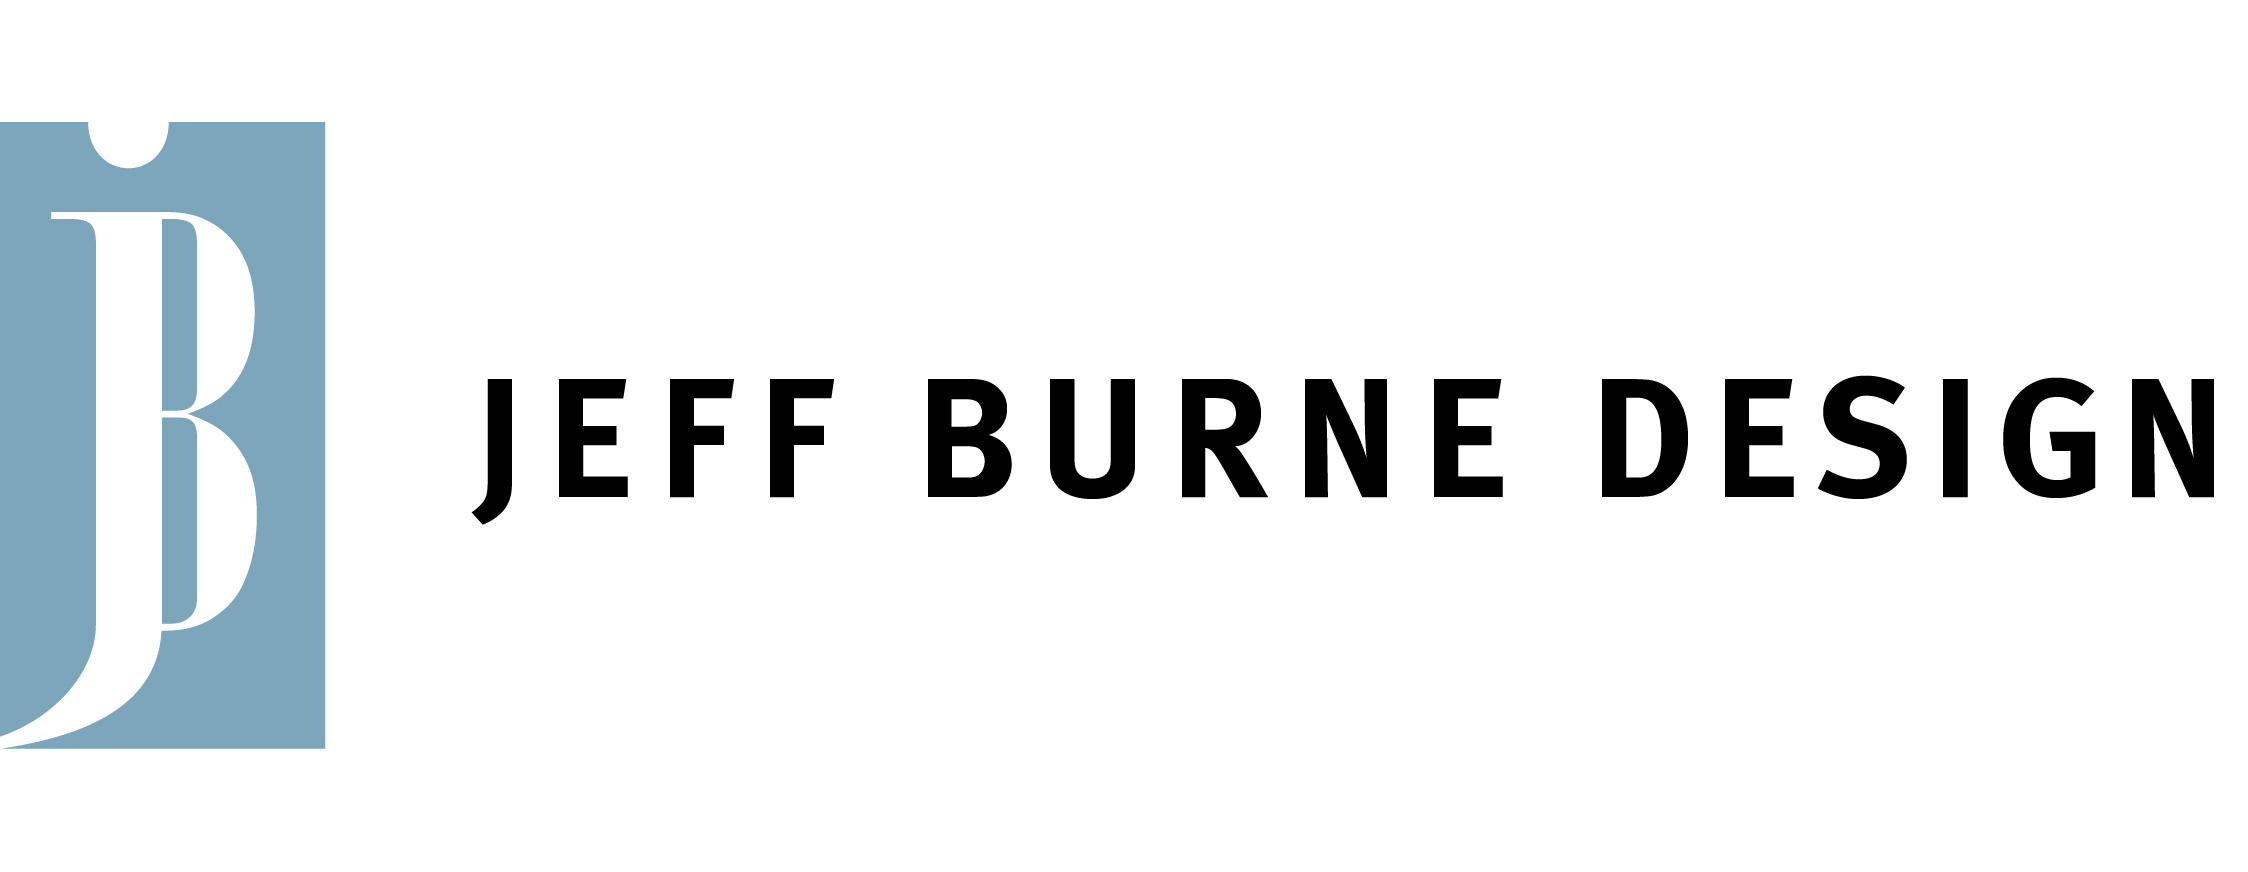 Jeff Burne Design